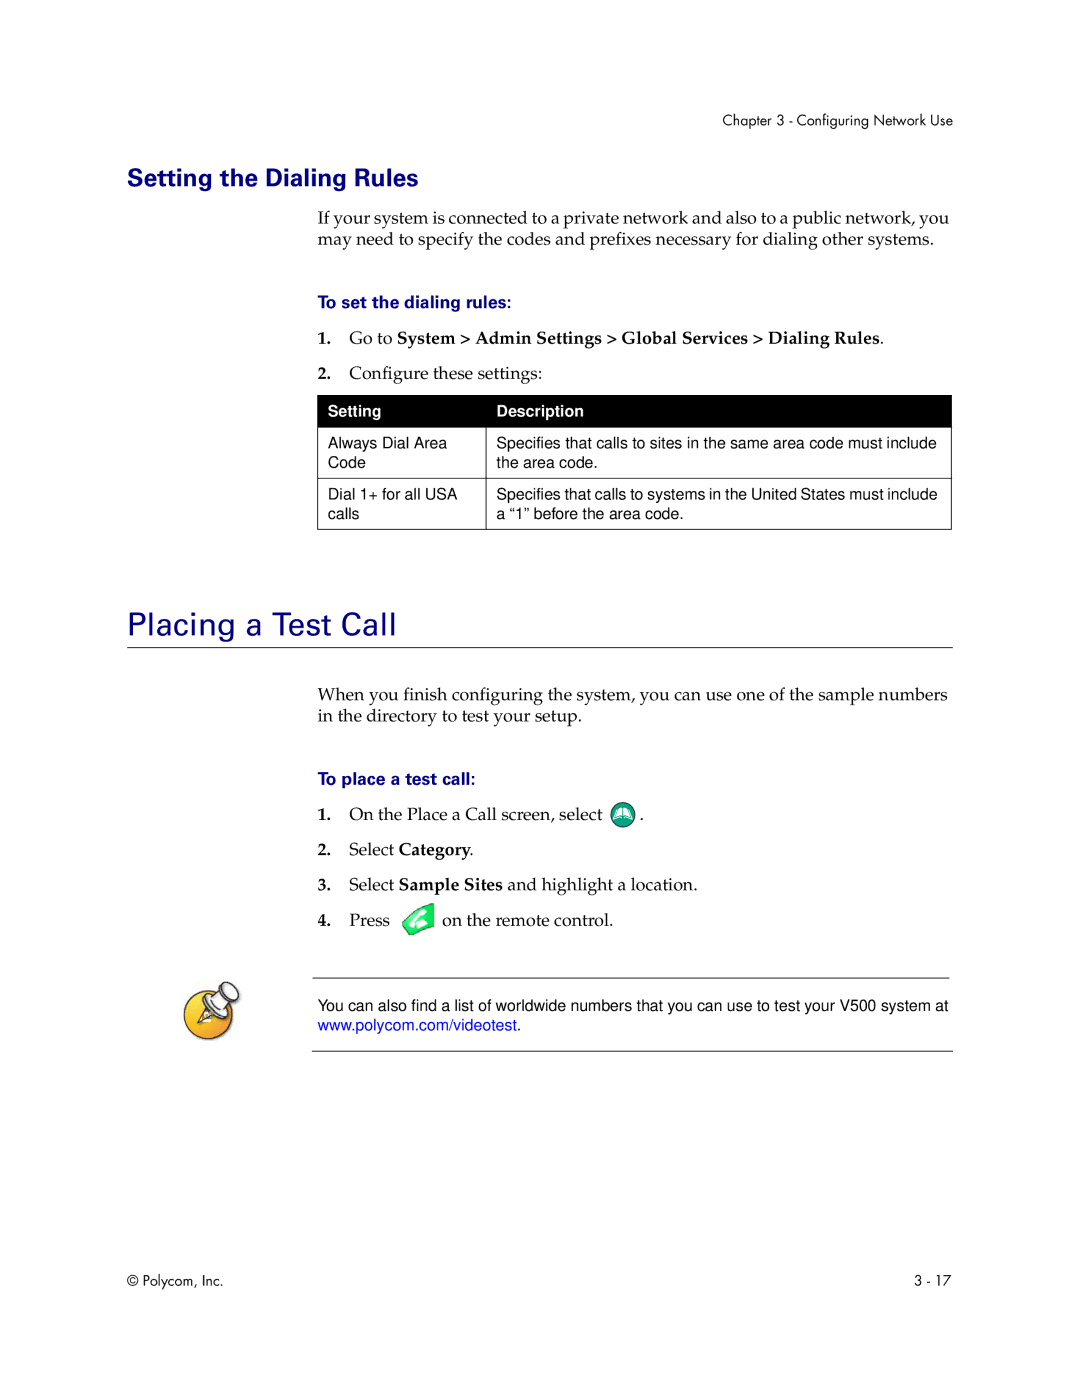 Polycom V500 manual Placing a Test Call, Setting the Dialing Rules, To set the dialing rules, To place a test call 